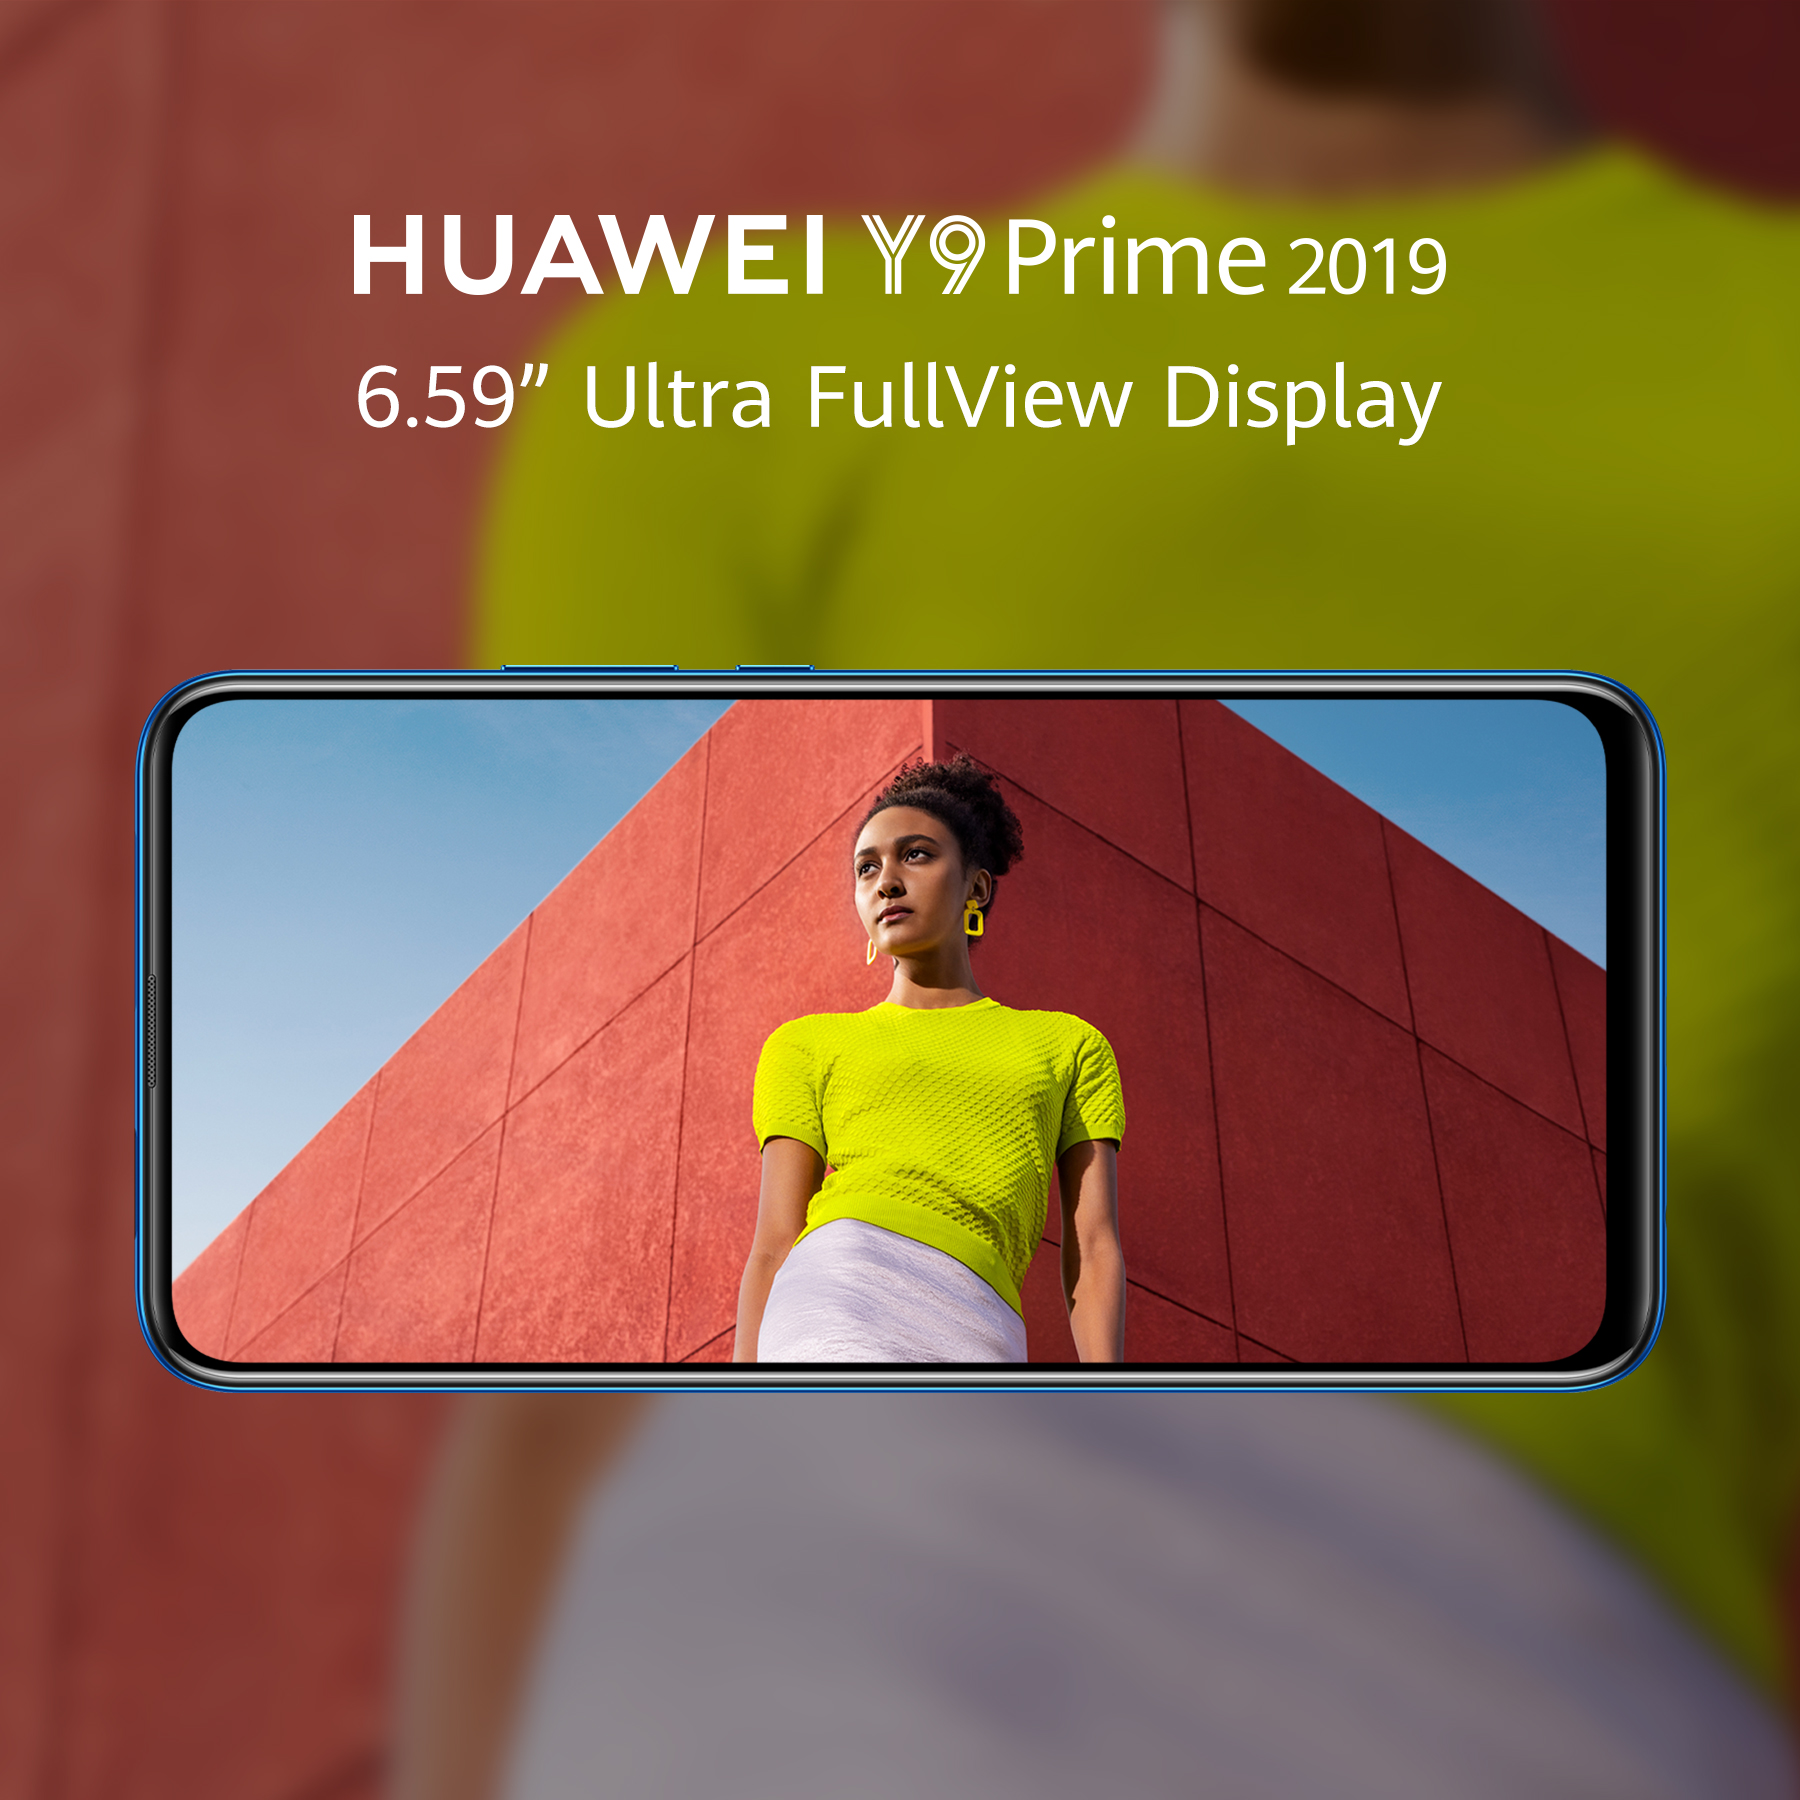 HUAWEI Y9 Prime 2019 is the Best Choice under PKR 35,000/-